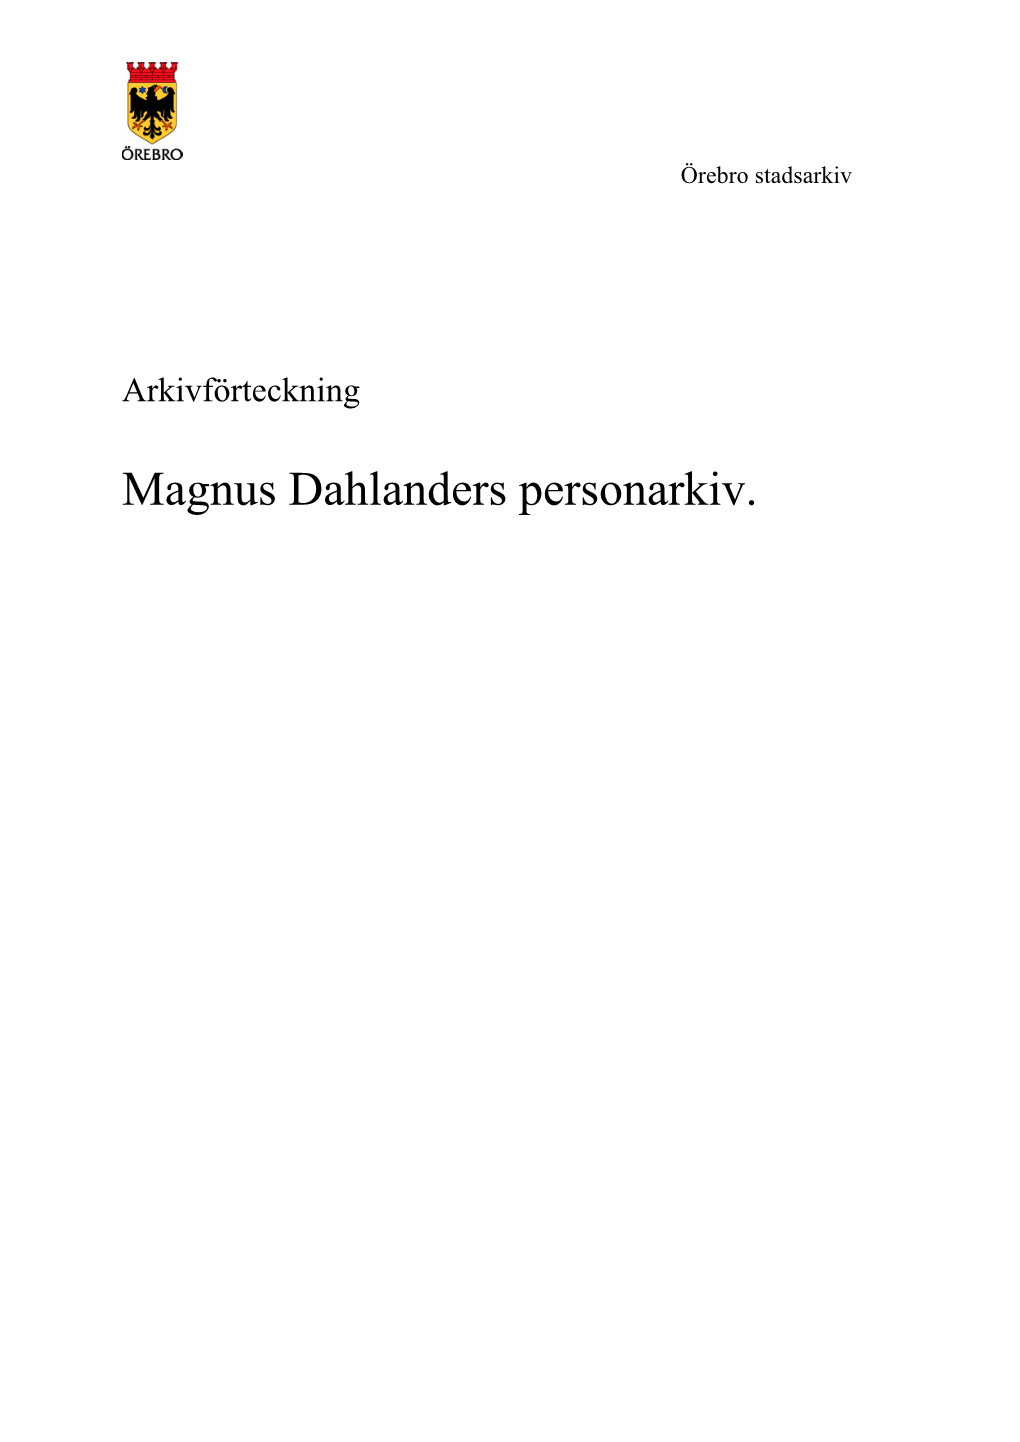 Magnus Dahlanders Personarkiv